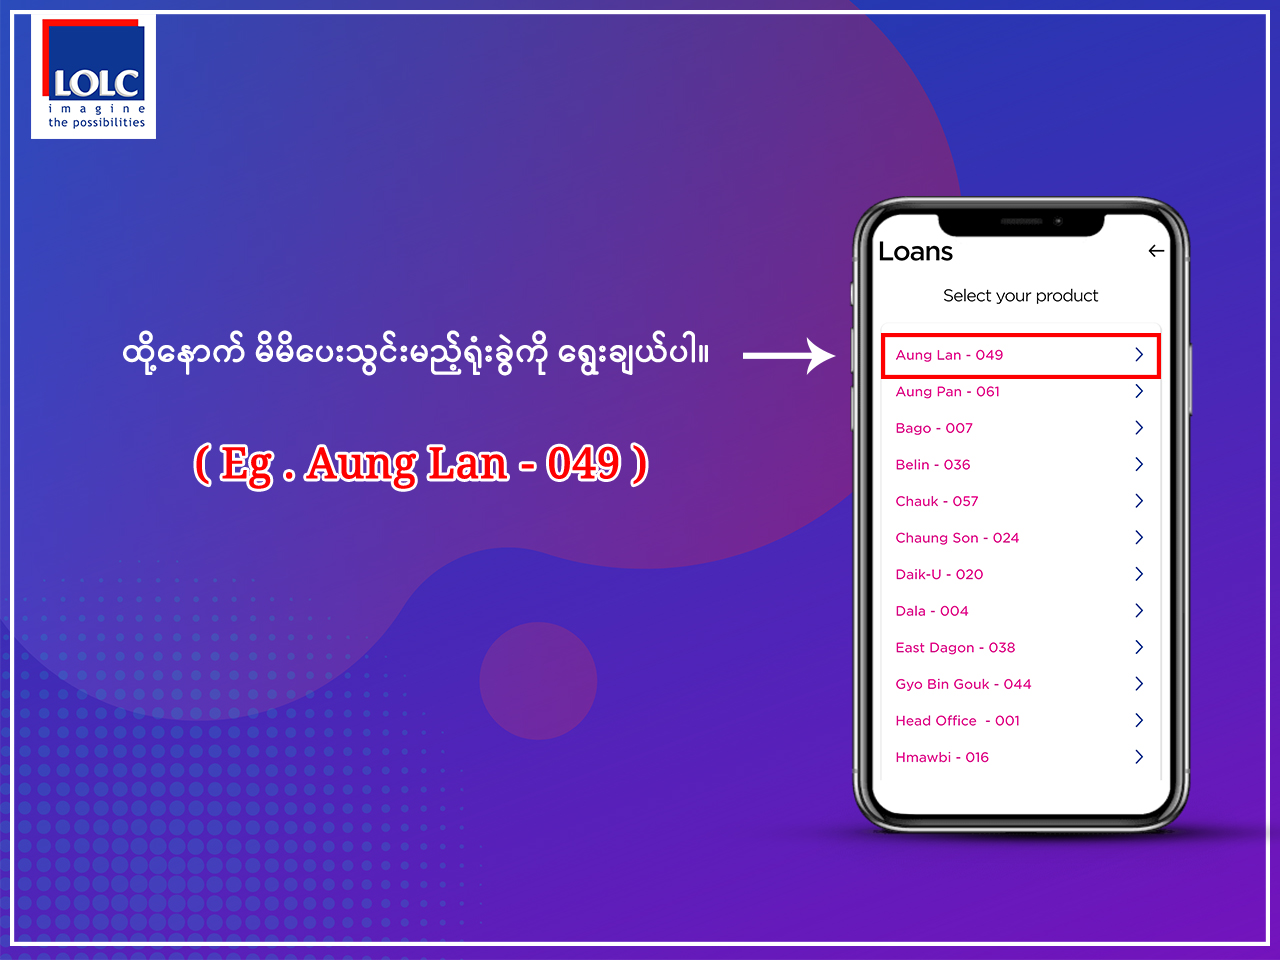 LOLC Myanmar